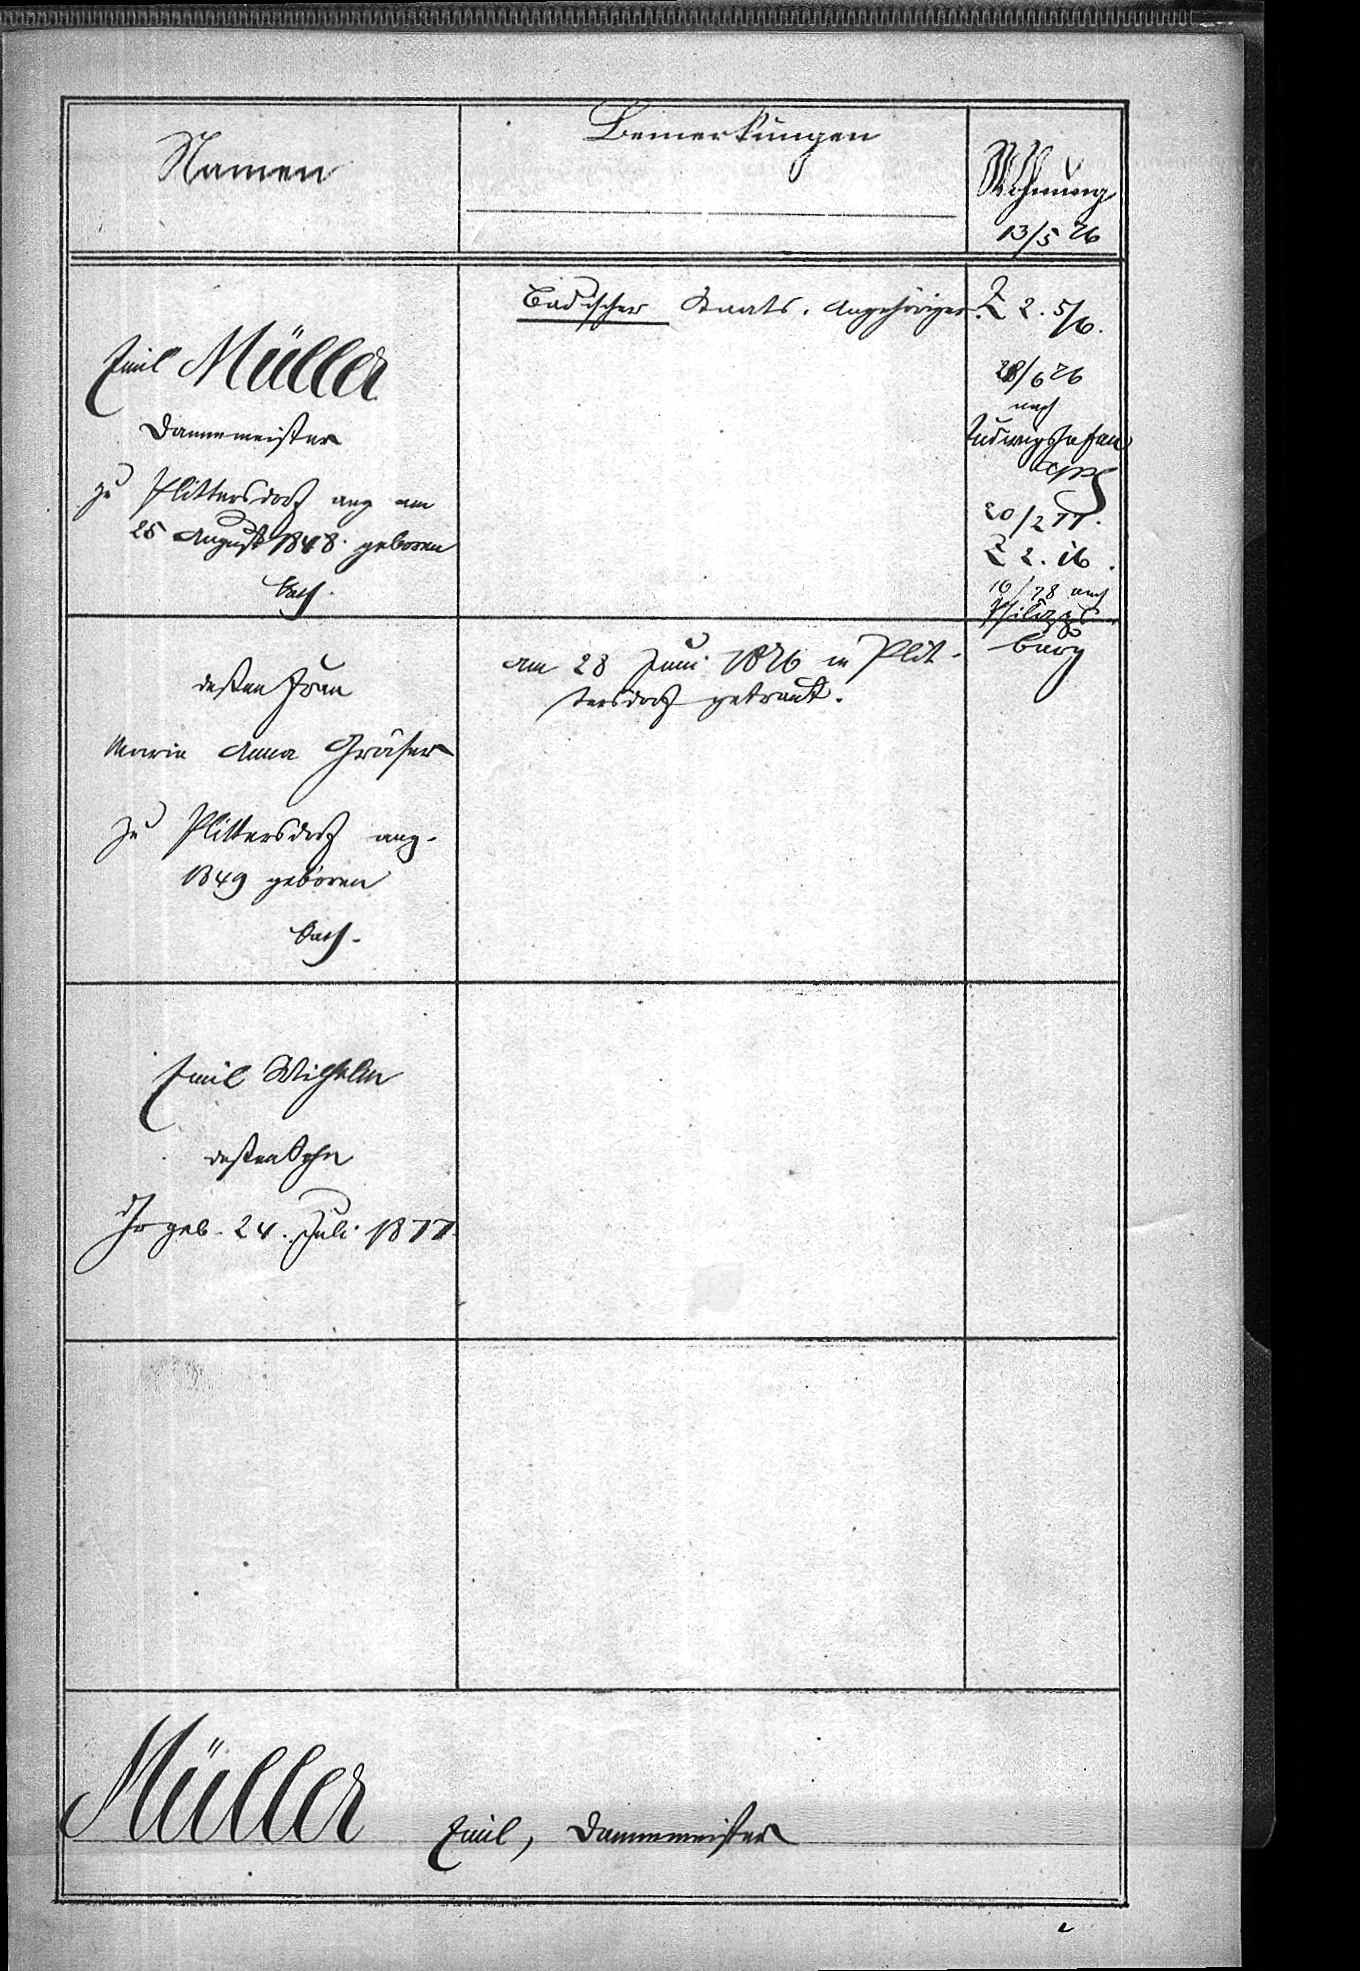 Mannheim, Germany, Family Registers, 1760-1900